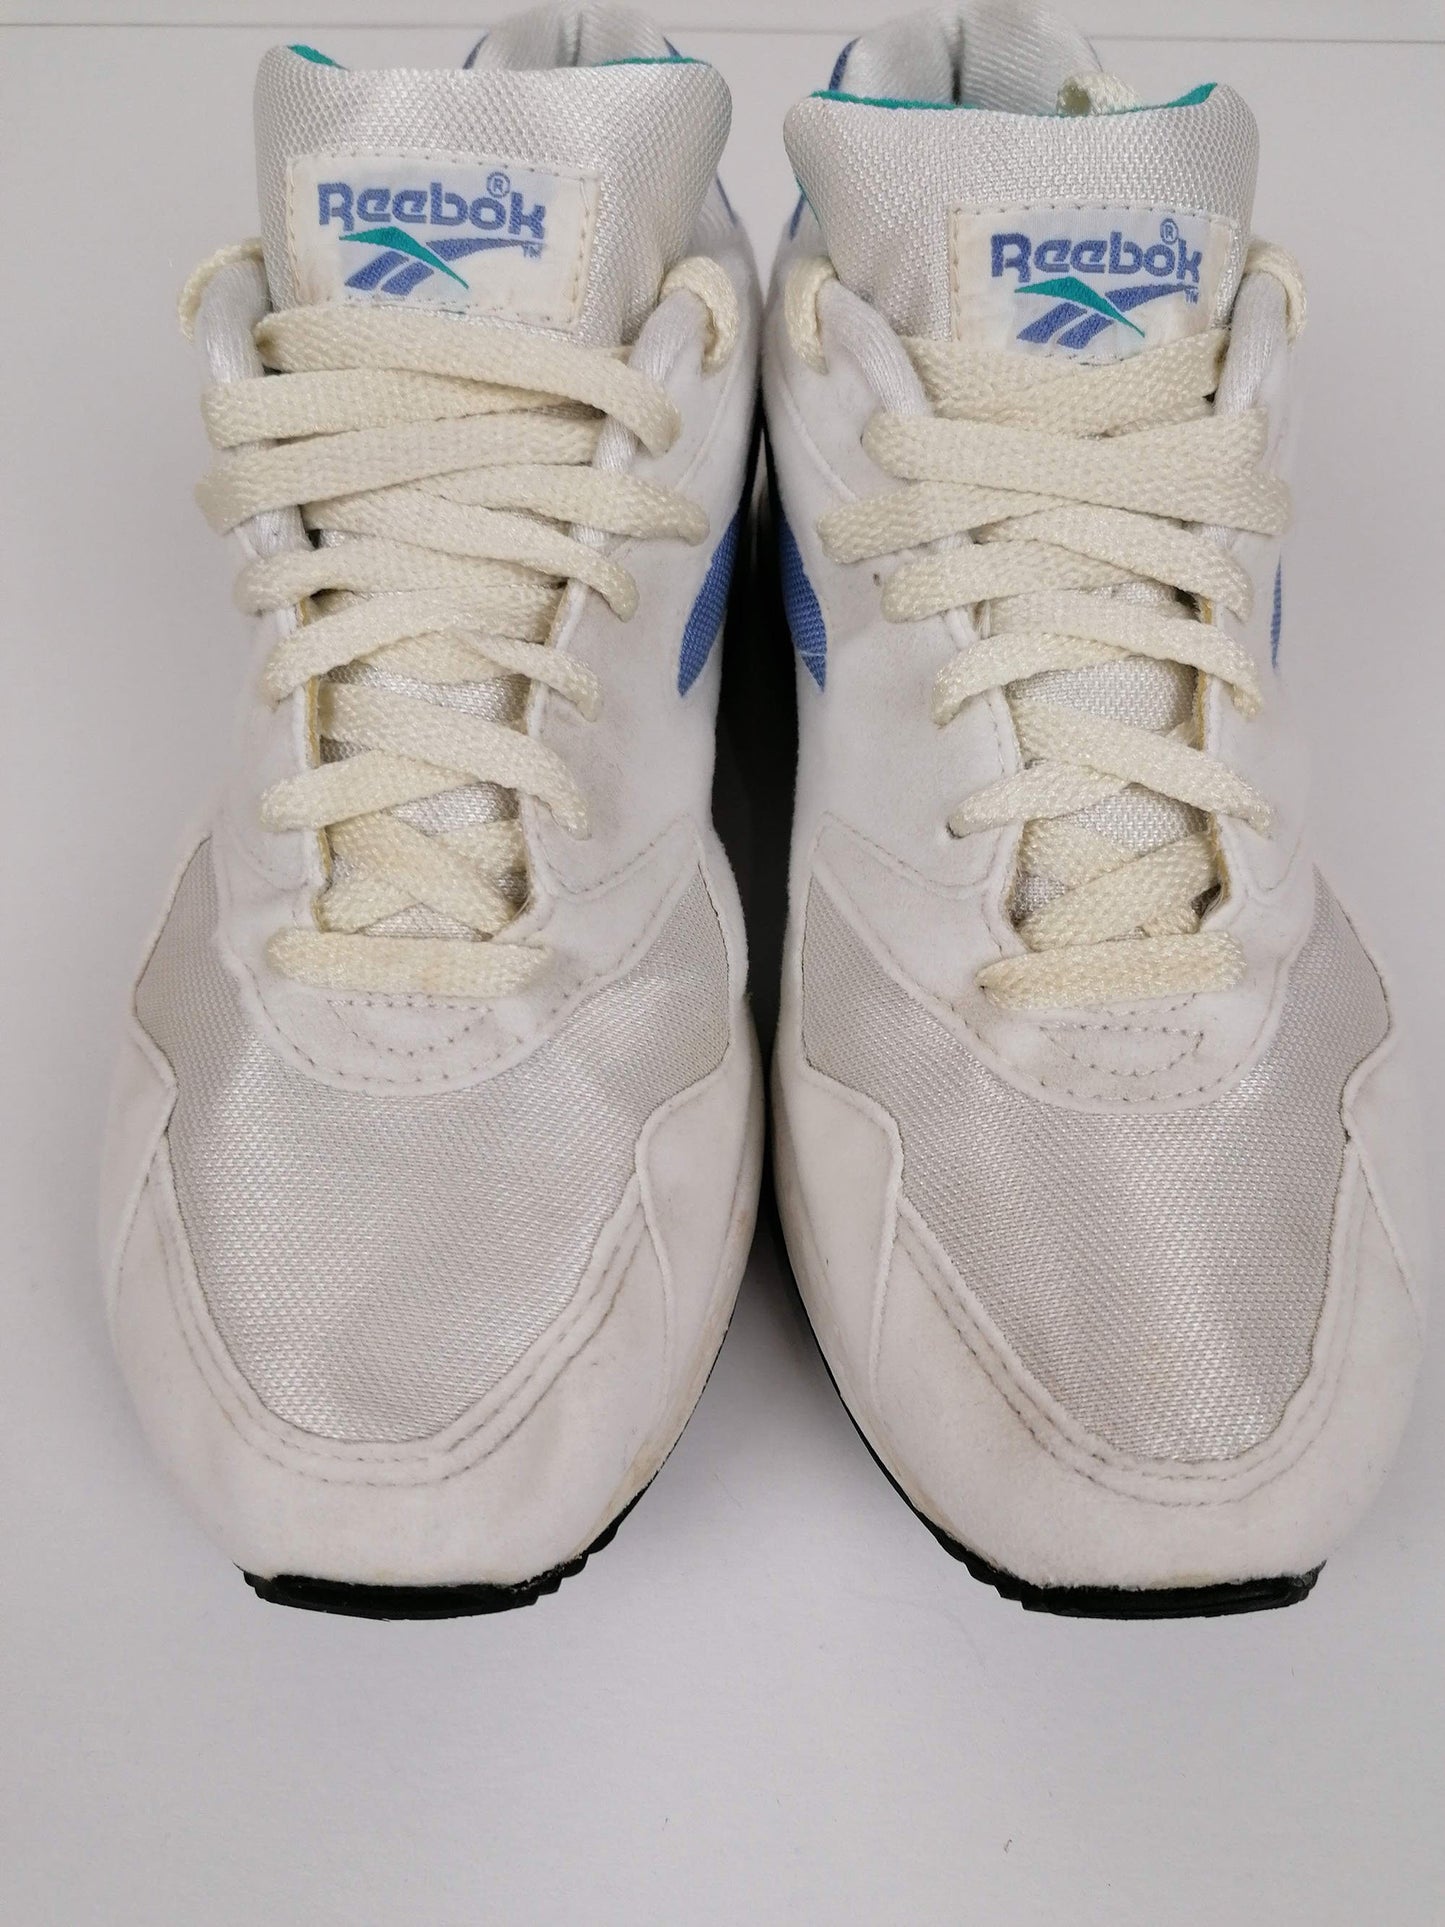 Vintage 80's 90's REEBOK Classic Retro Sneakers - size EU 38 / UK 5.5 / us 7 -7.5